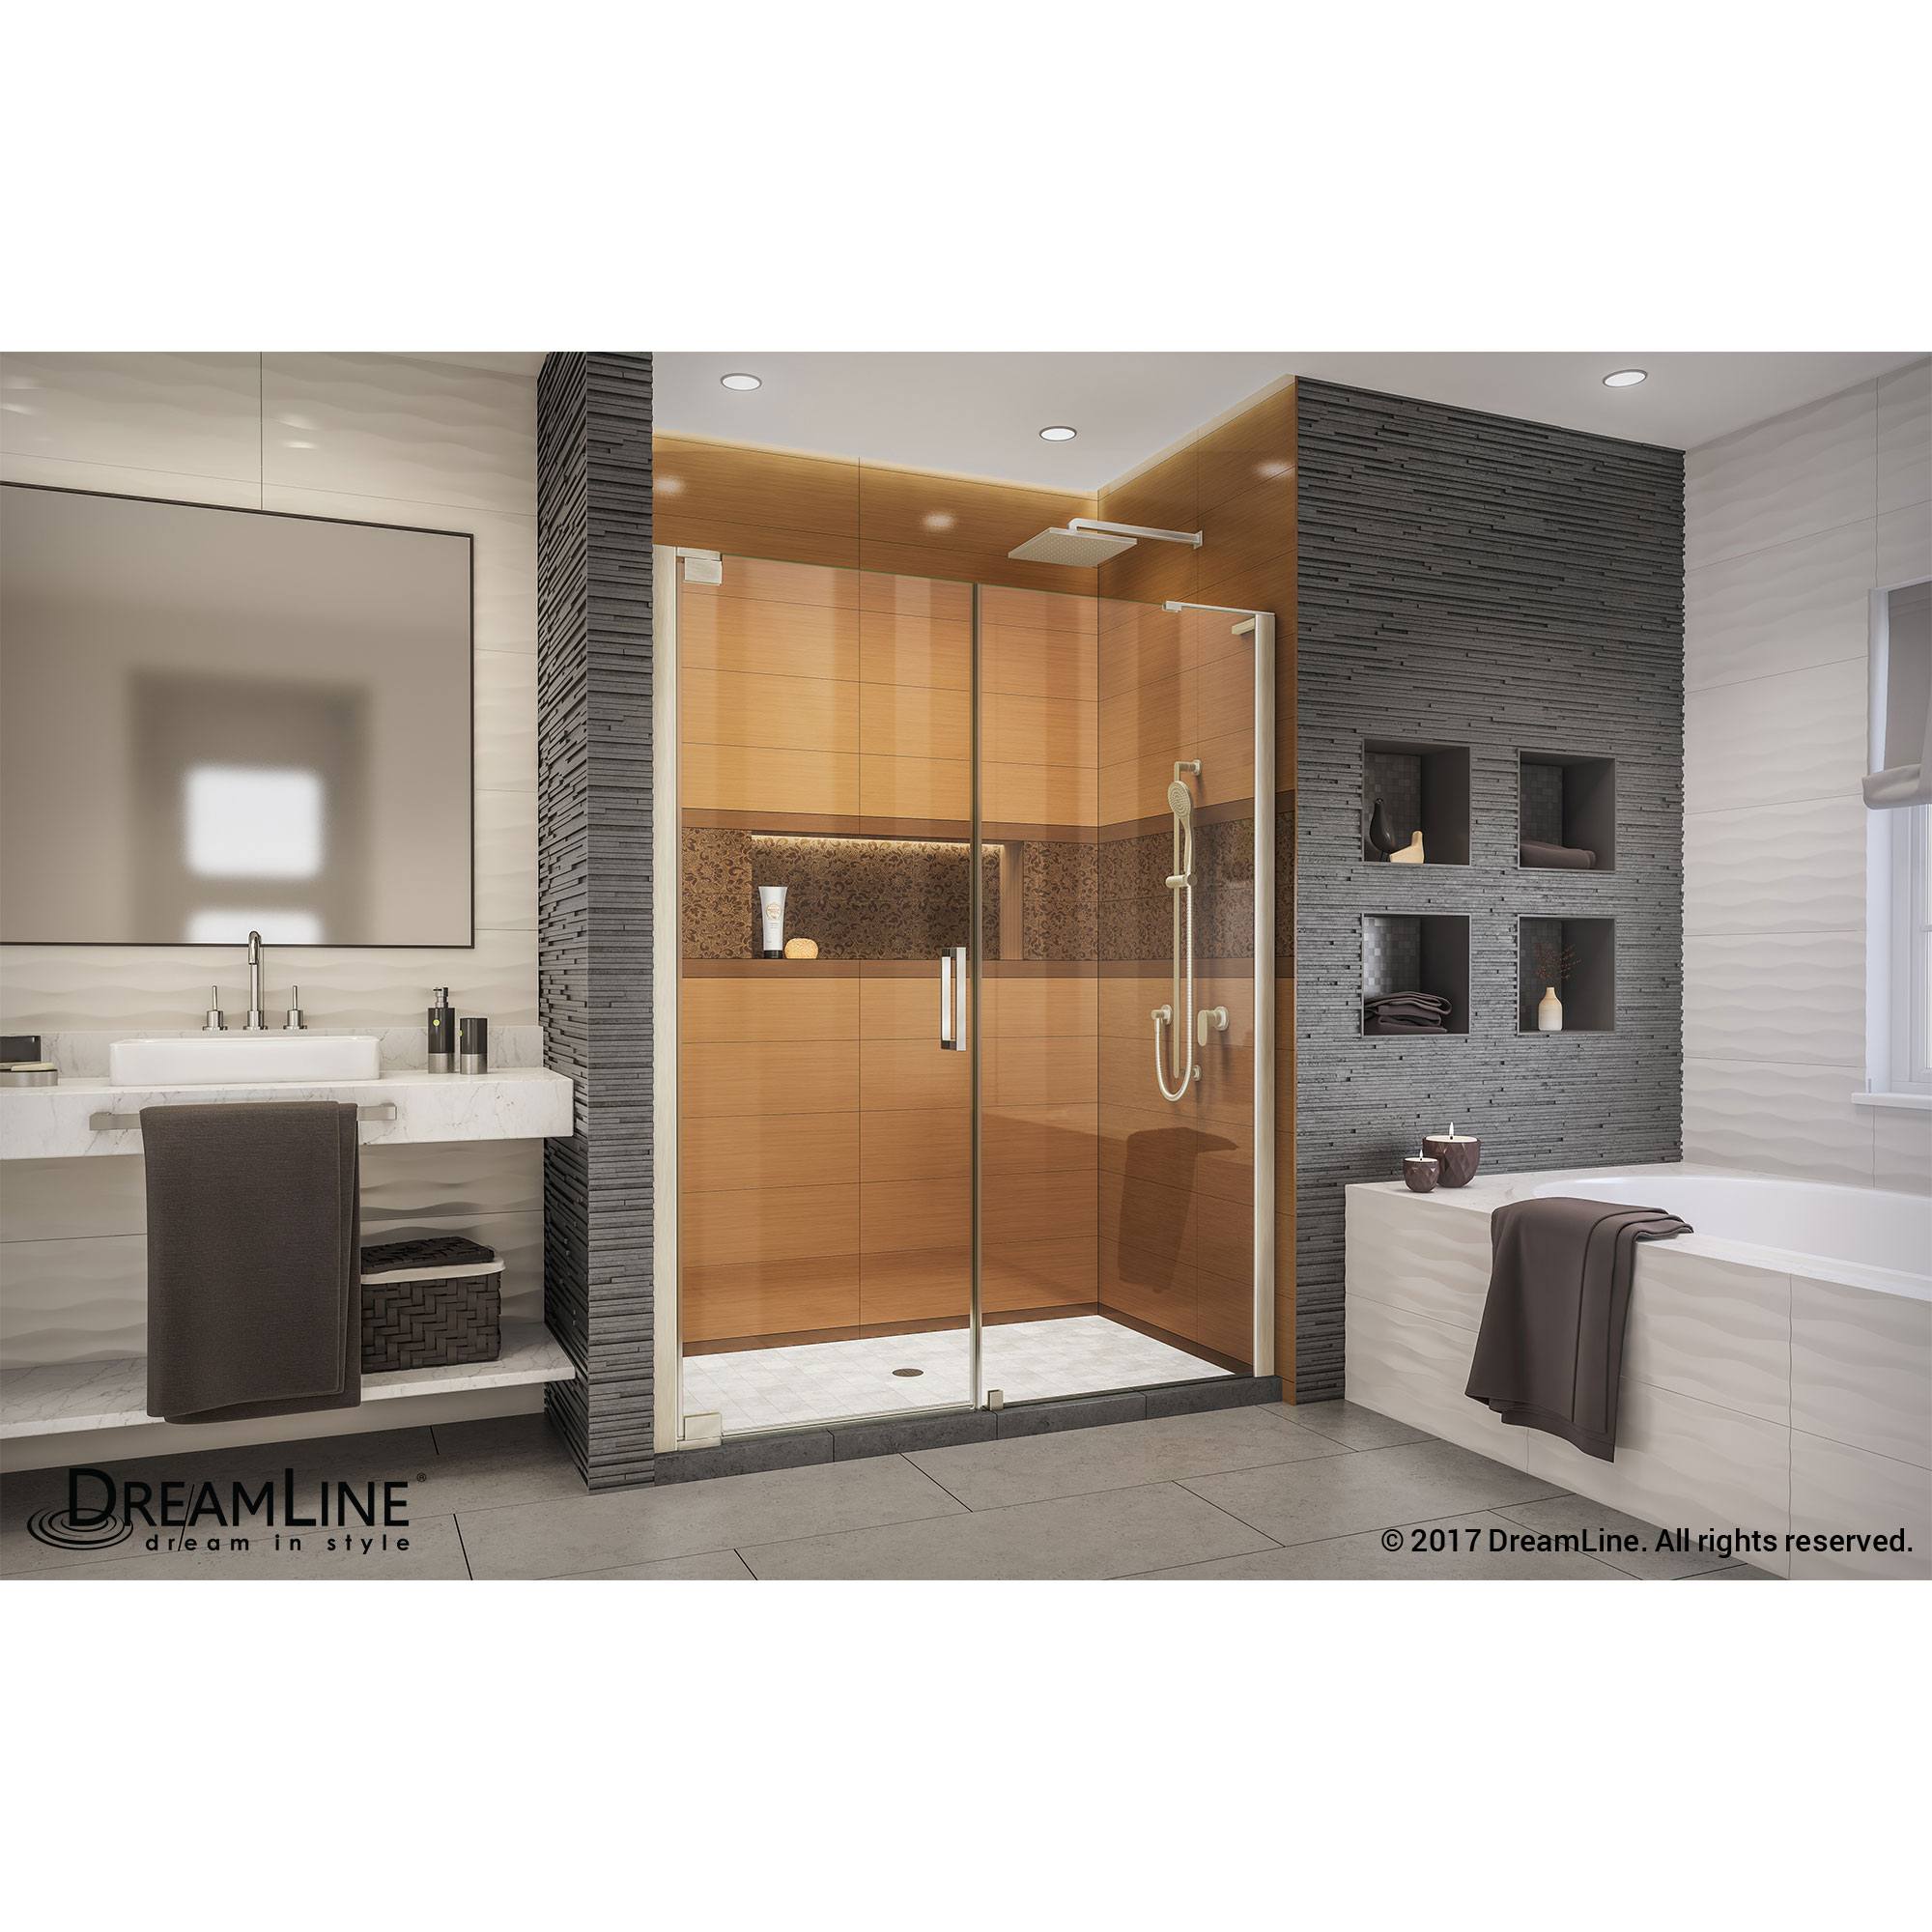 DreamLine Elegance-LS 60 1/4 - 62 1/4 in. W x 72 in. H Frameless Pivot Shower Door in Brushed Nickel